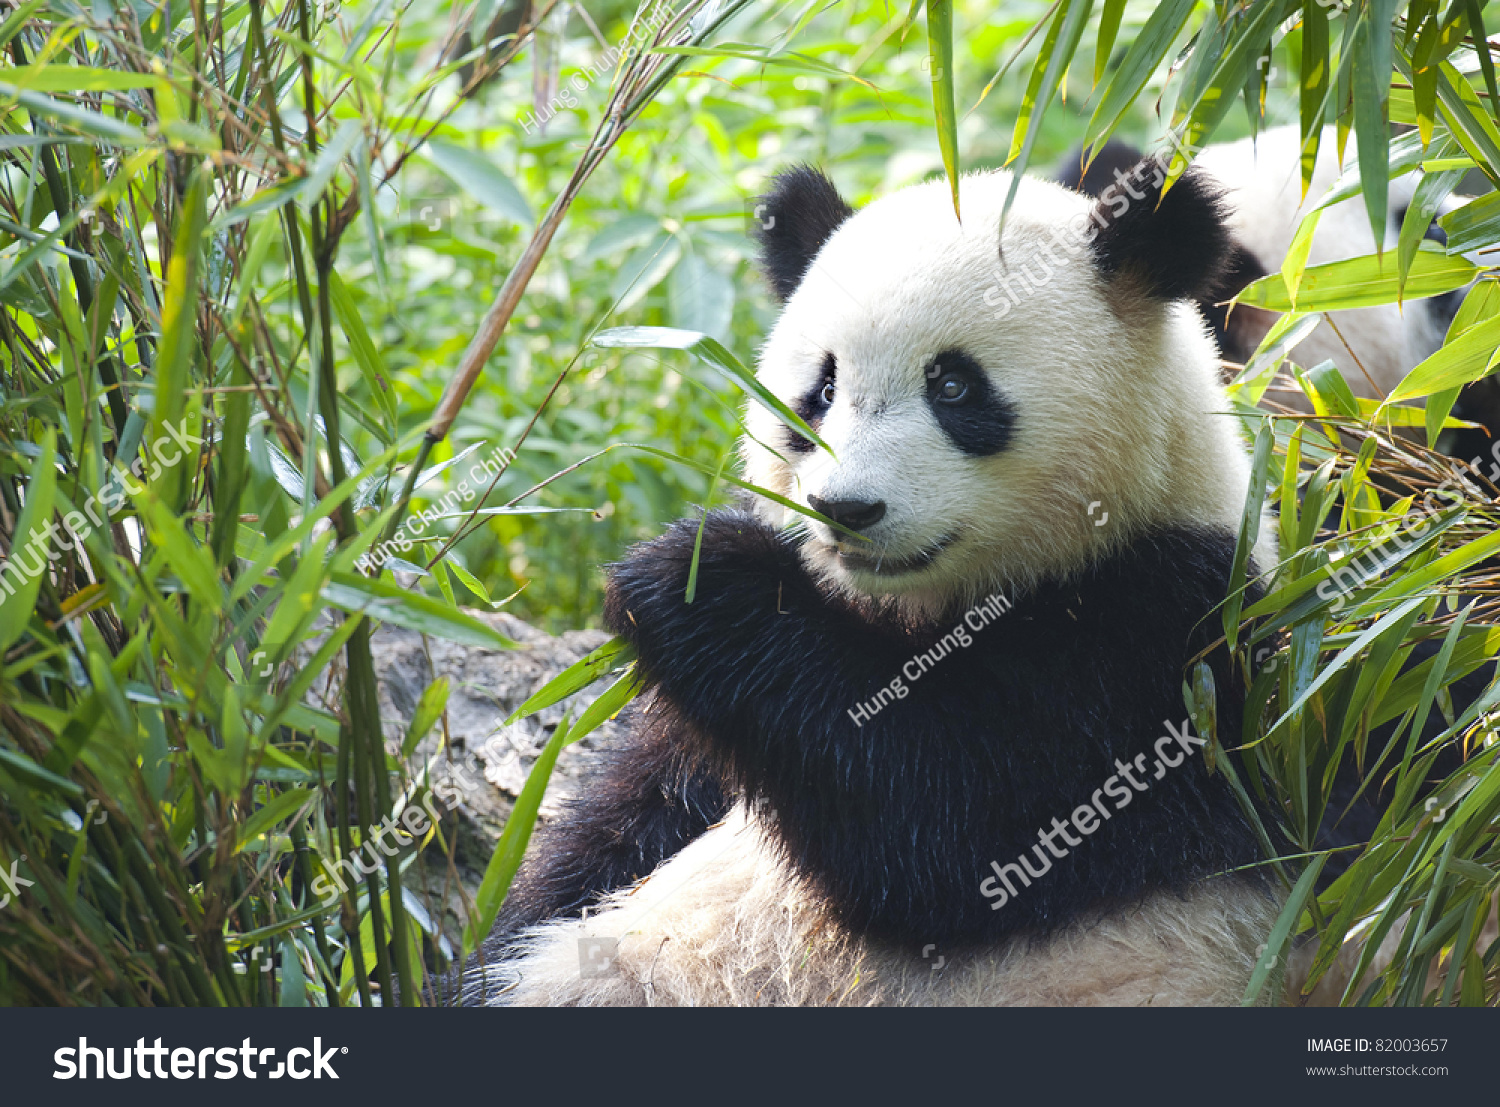 Hungry giant panda bear eating bamboo #82003657